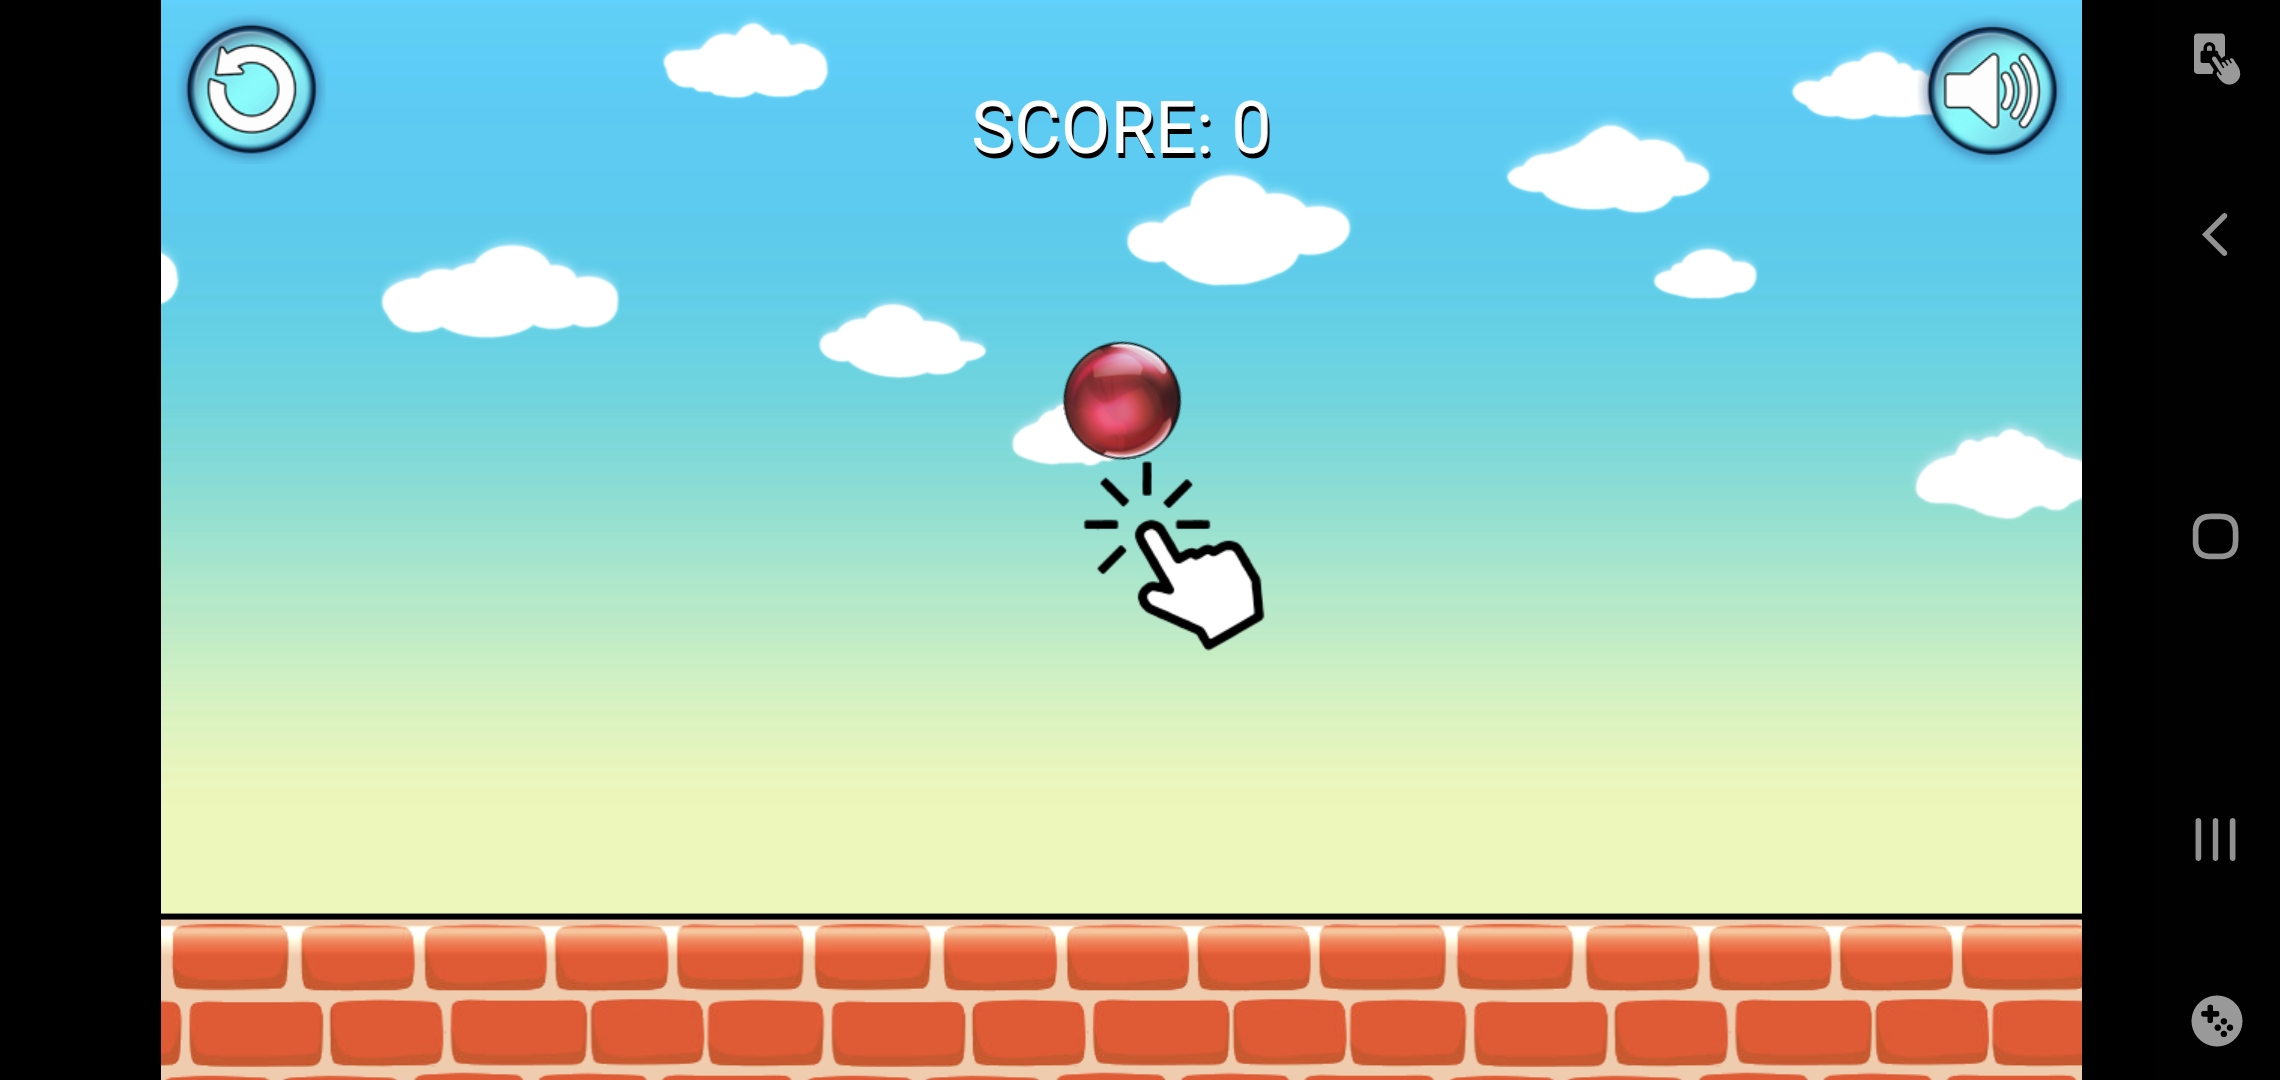 Flappy Bounce Screenshot